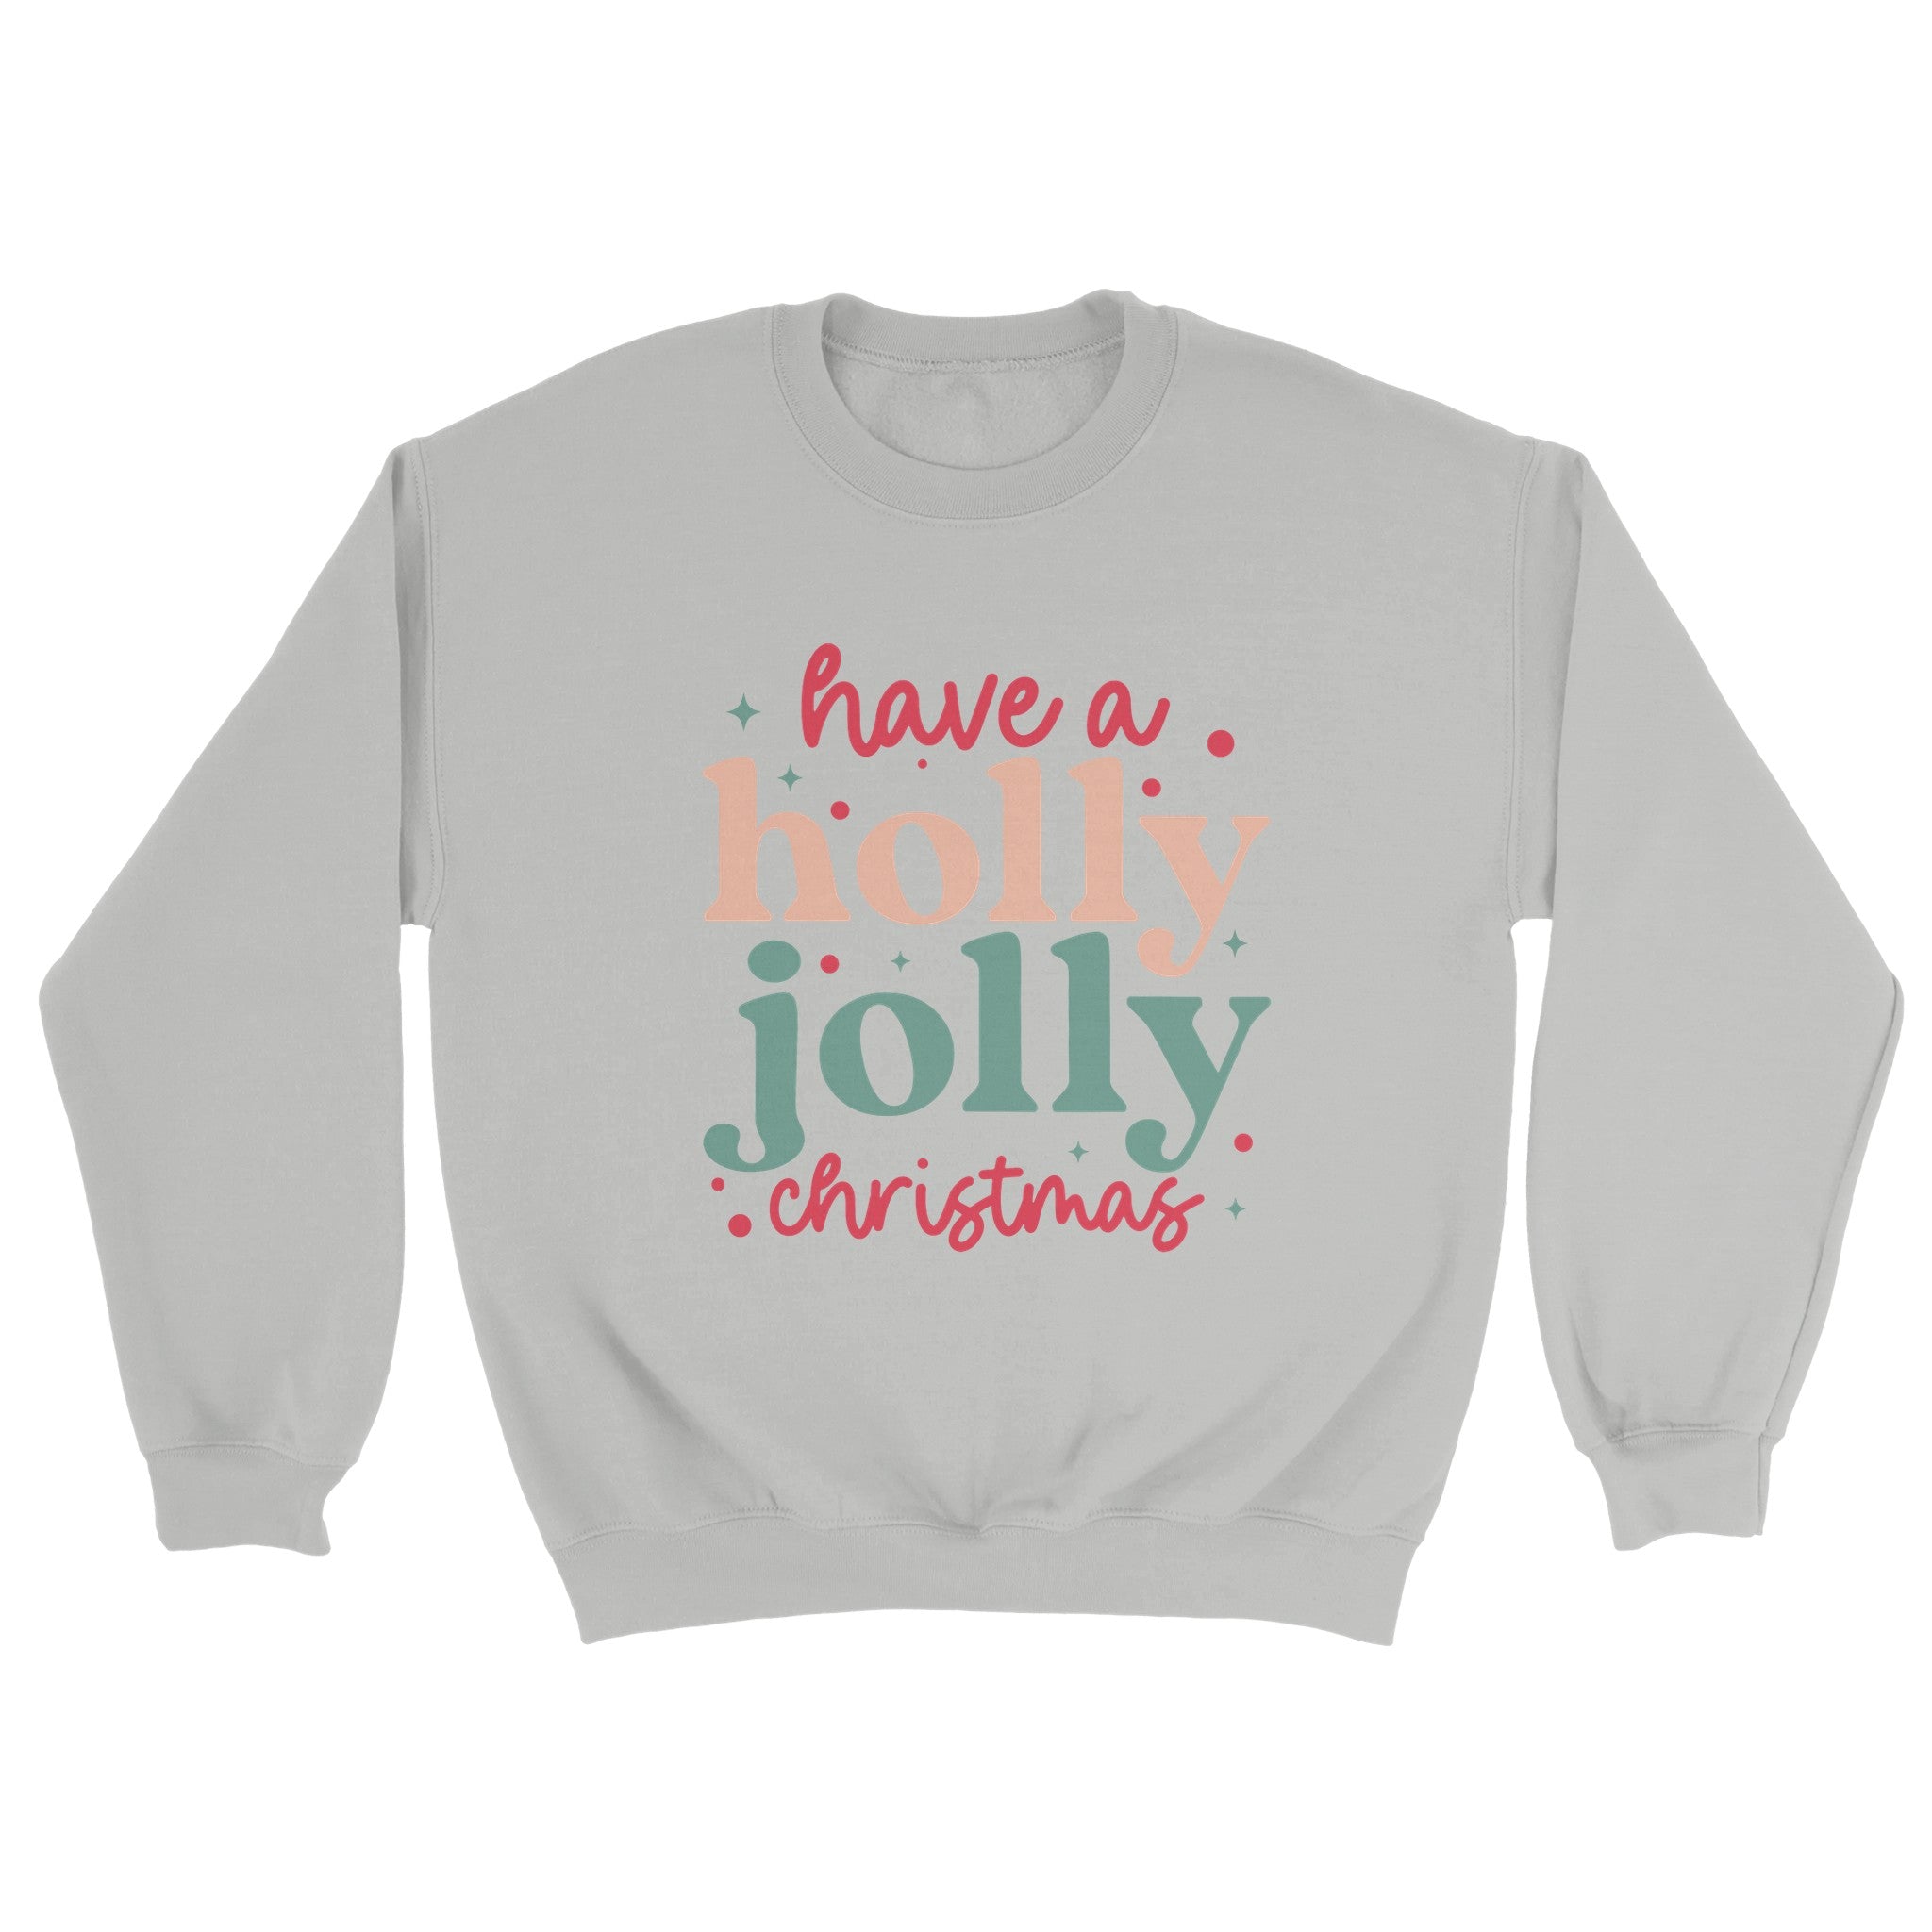 Holly Jolly Christmas Sweatshirt I Crewneck Sweater